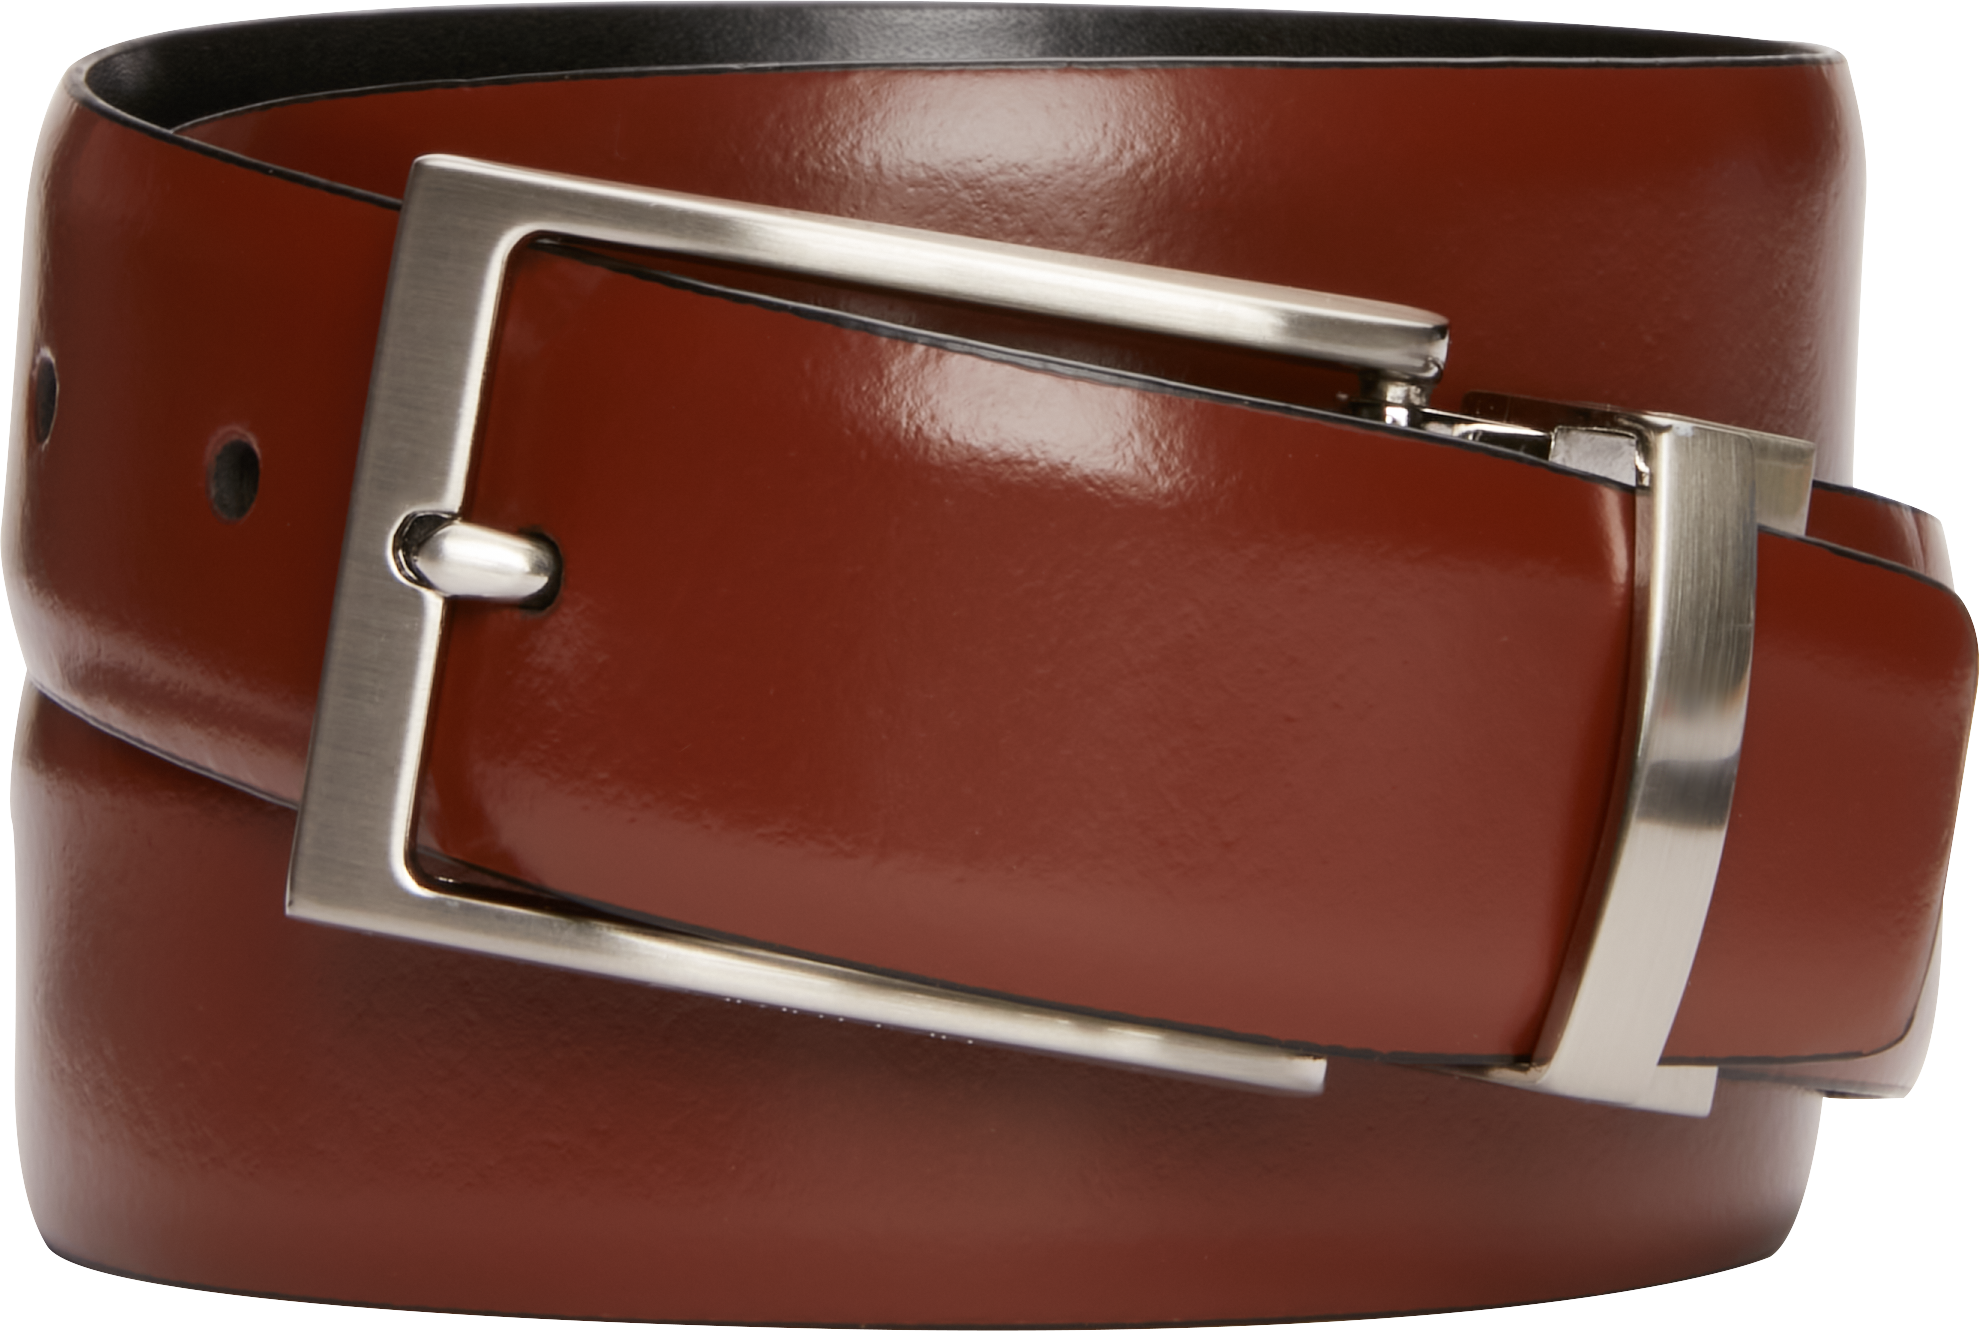 AEO Reversible Leather Belt